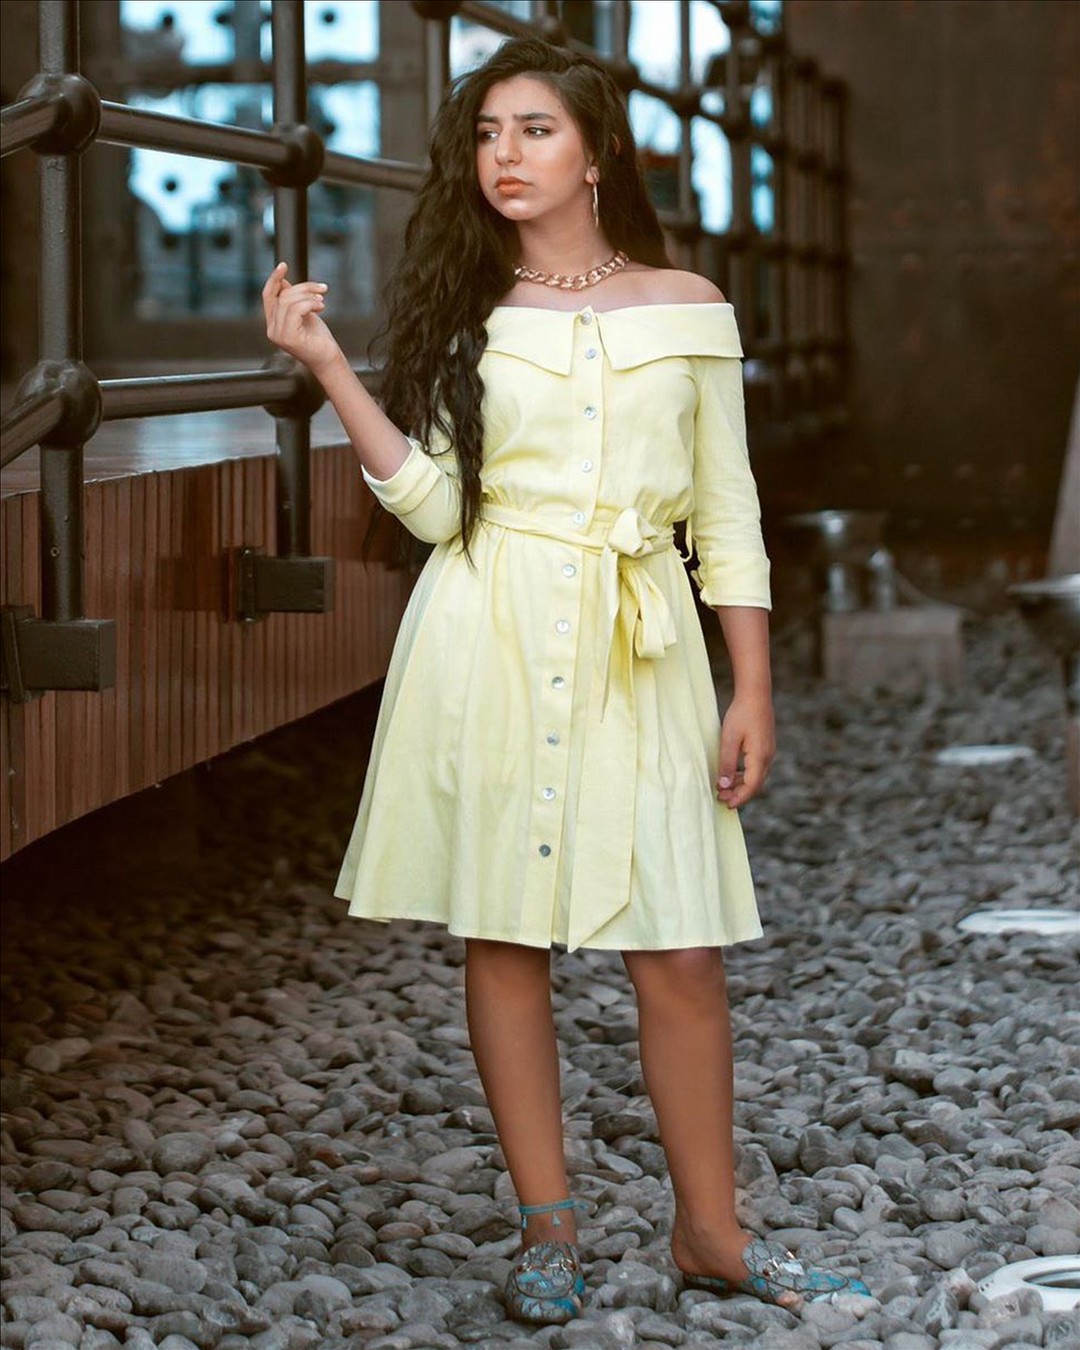 Ghrour Safar Yellow Dress Teen Girl Photo 02